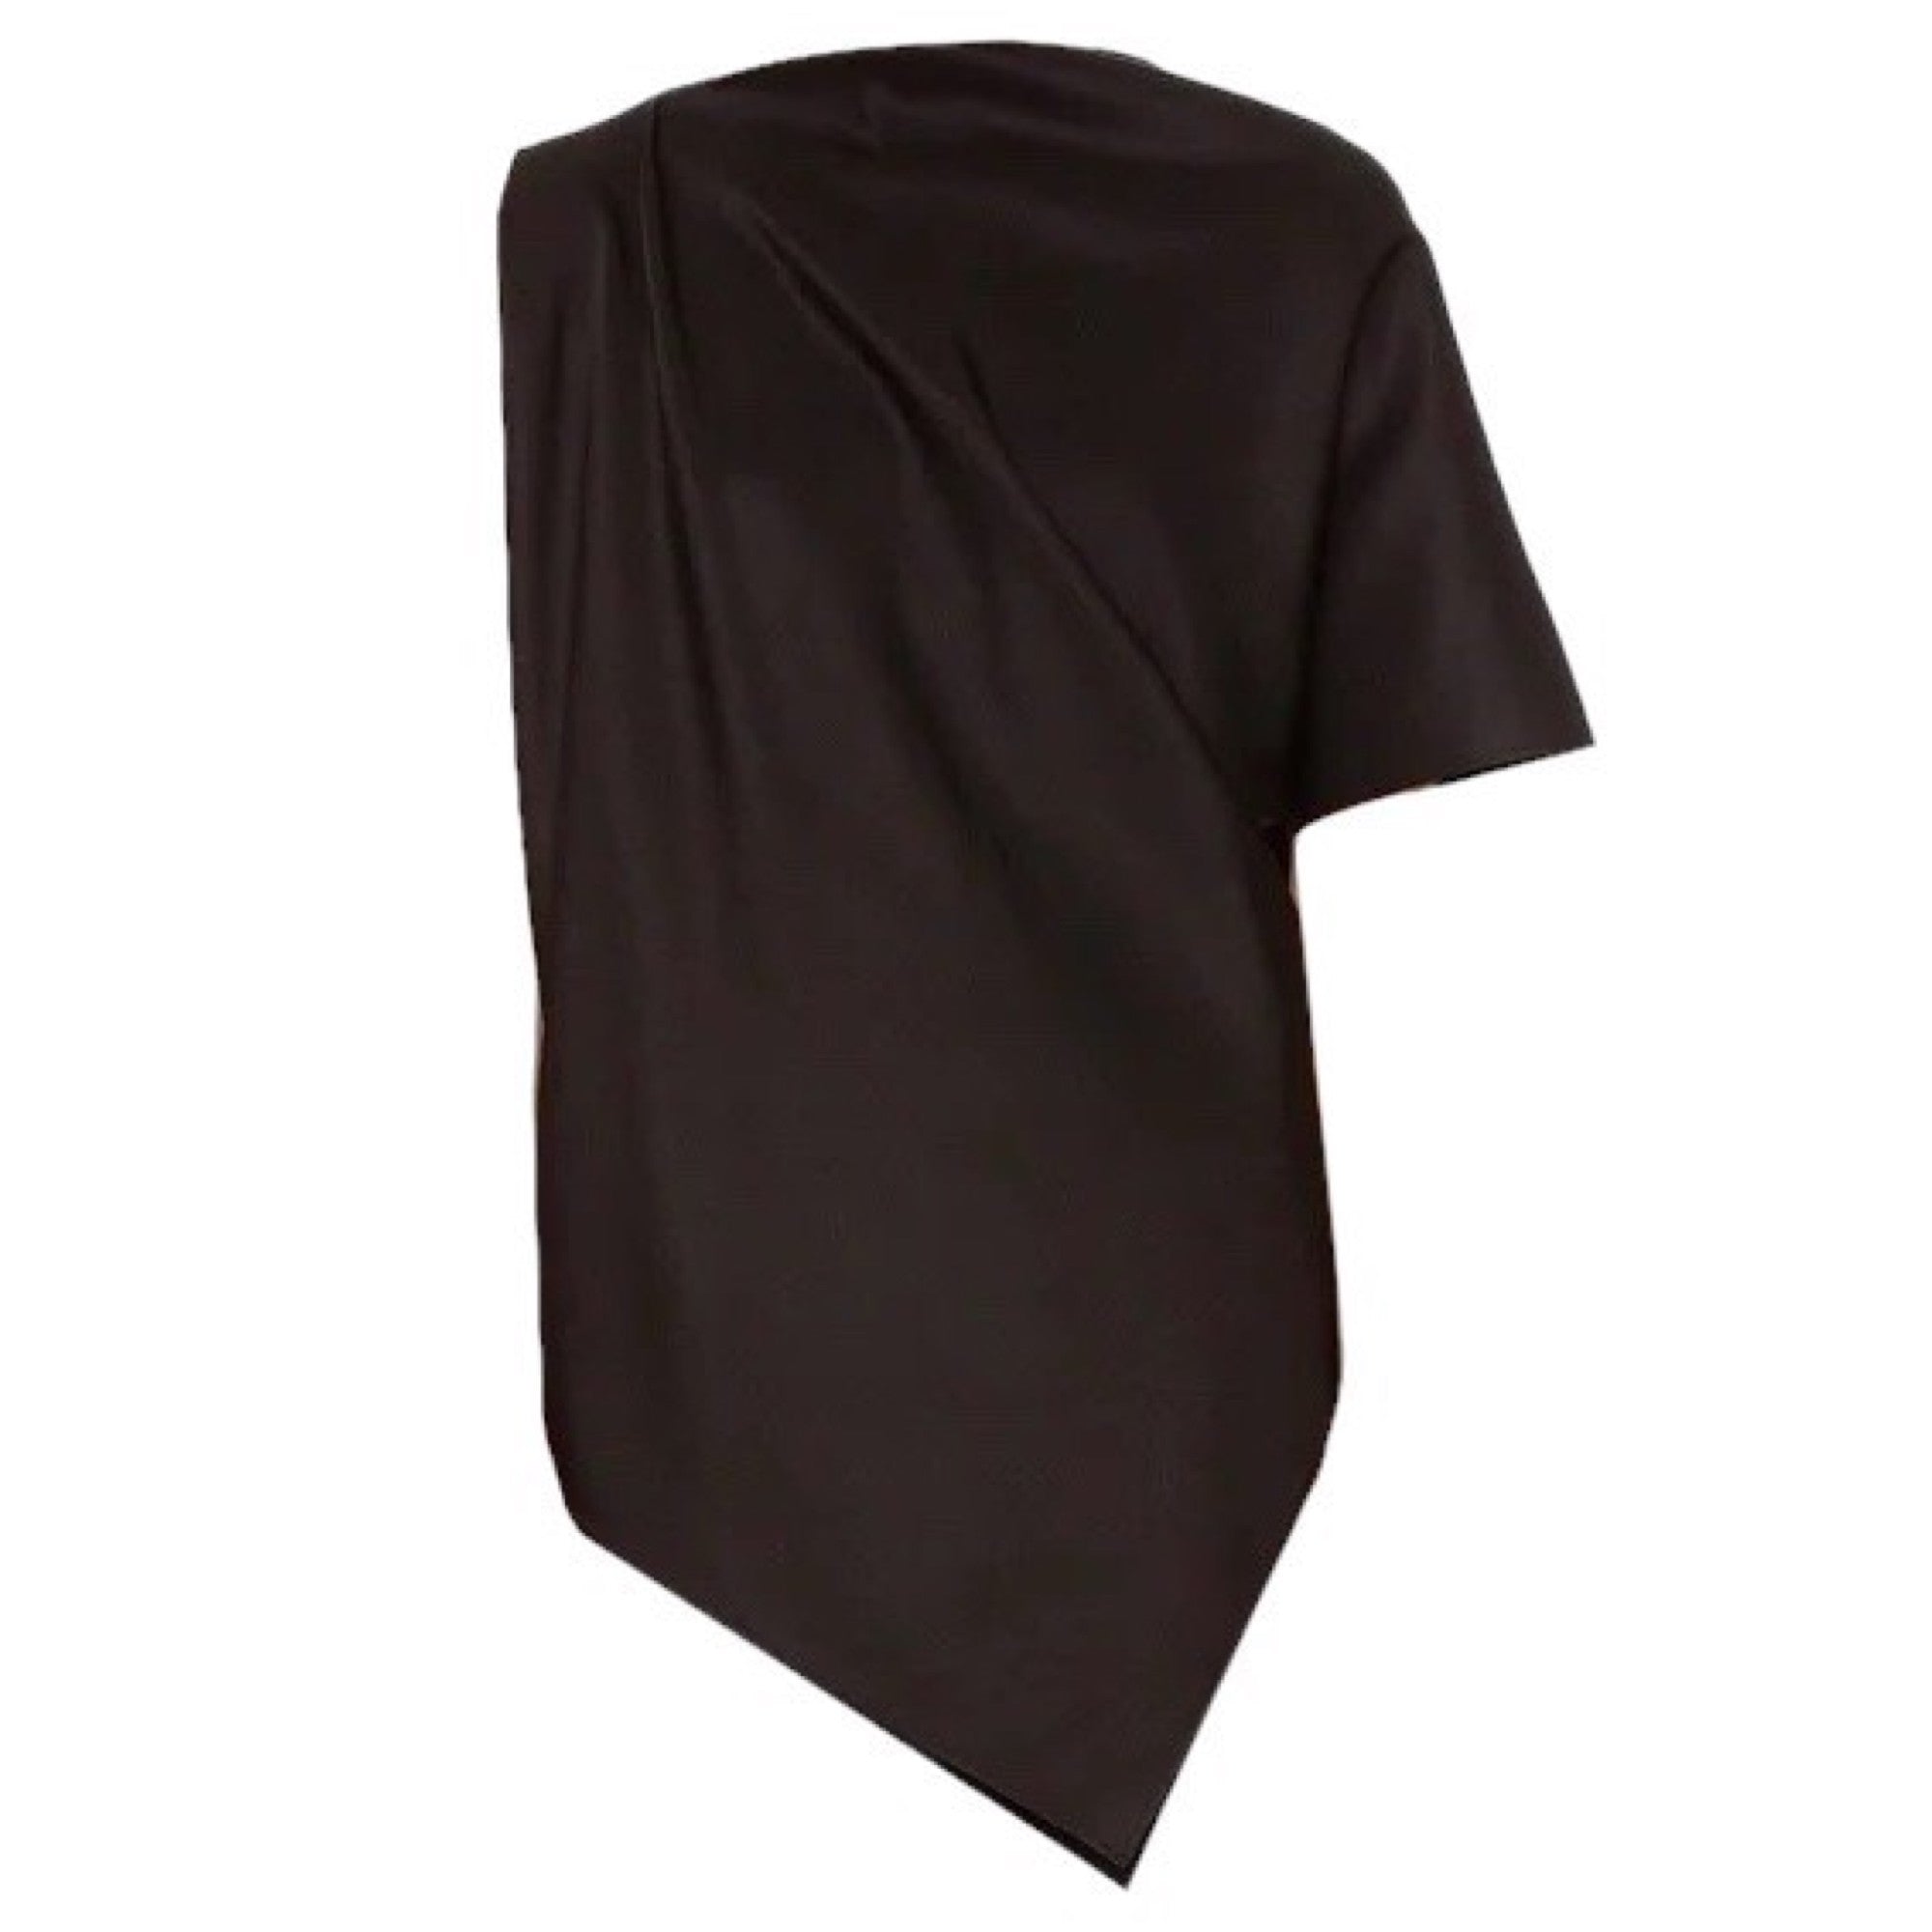 The Row Black Kasper Asymmetric Silk and Wool Top